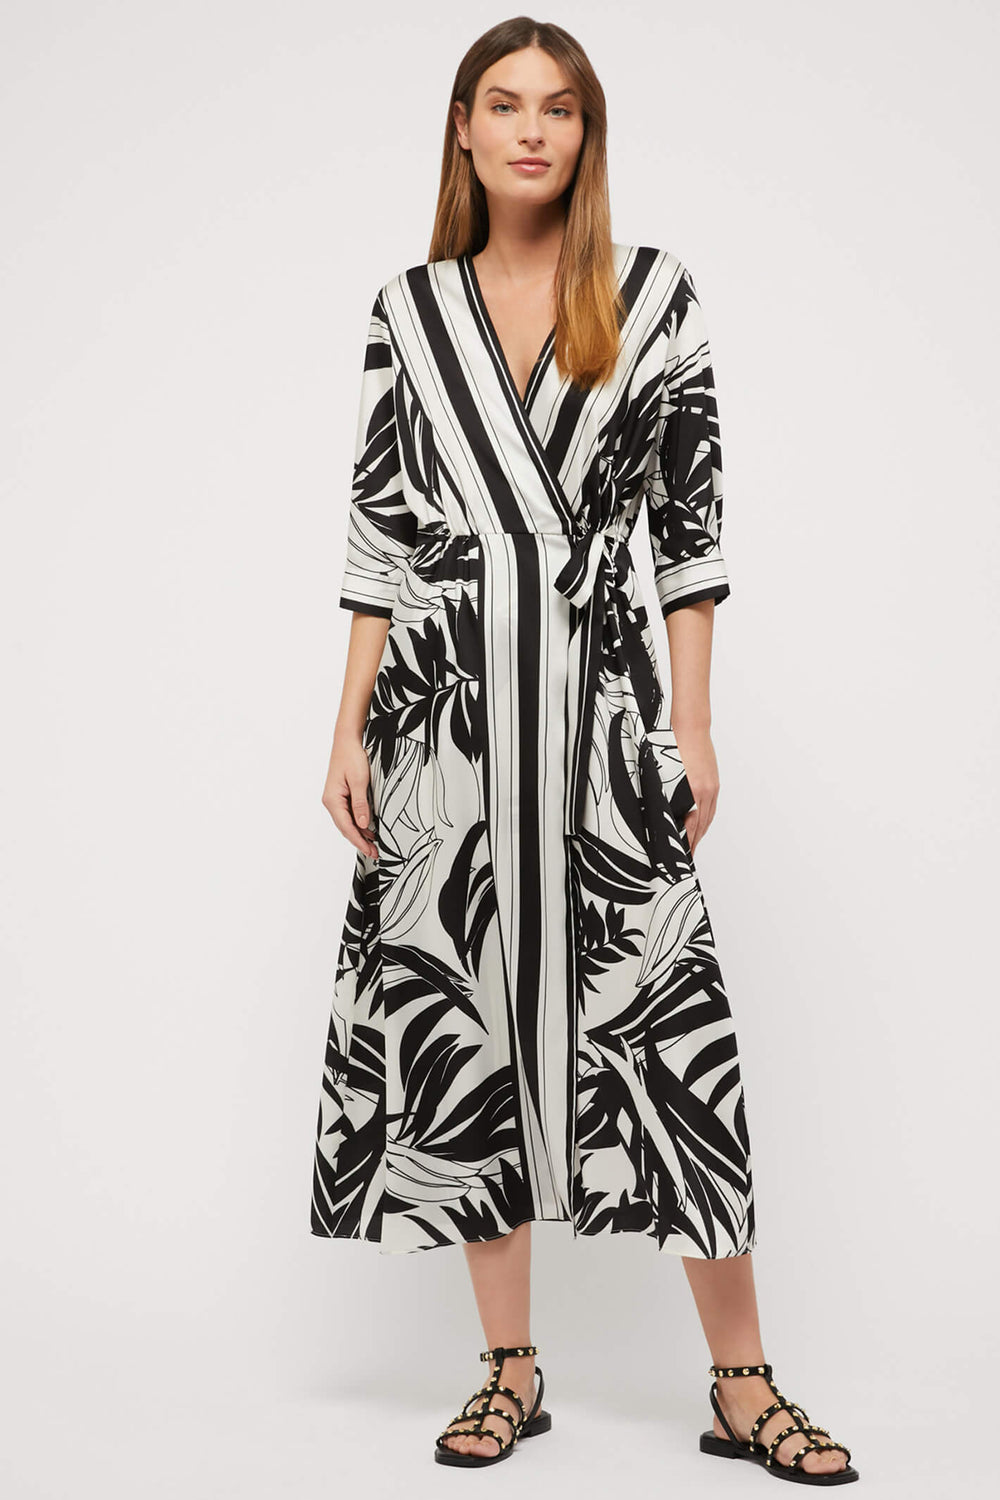 Pennyblack 12210123P Divisa Black White Leaf Print Wrap Dress - Olivia Grace Fashion